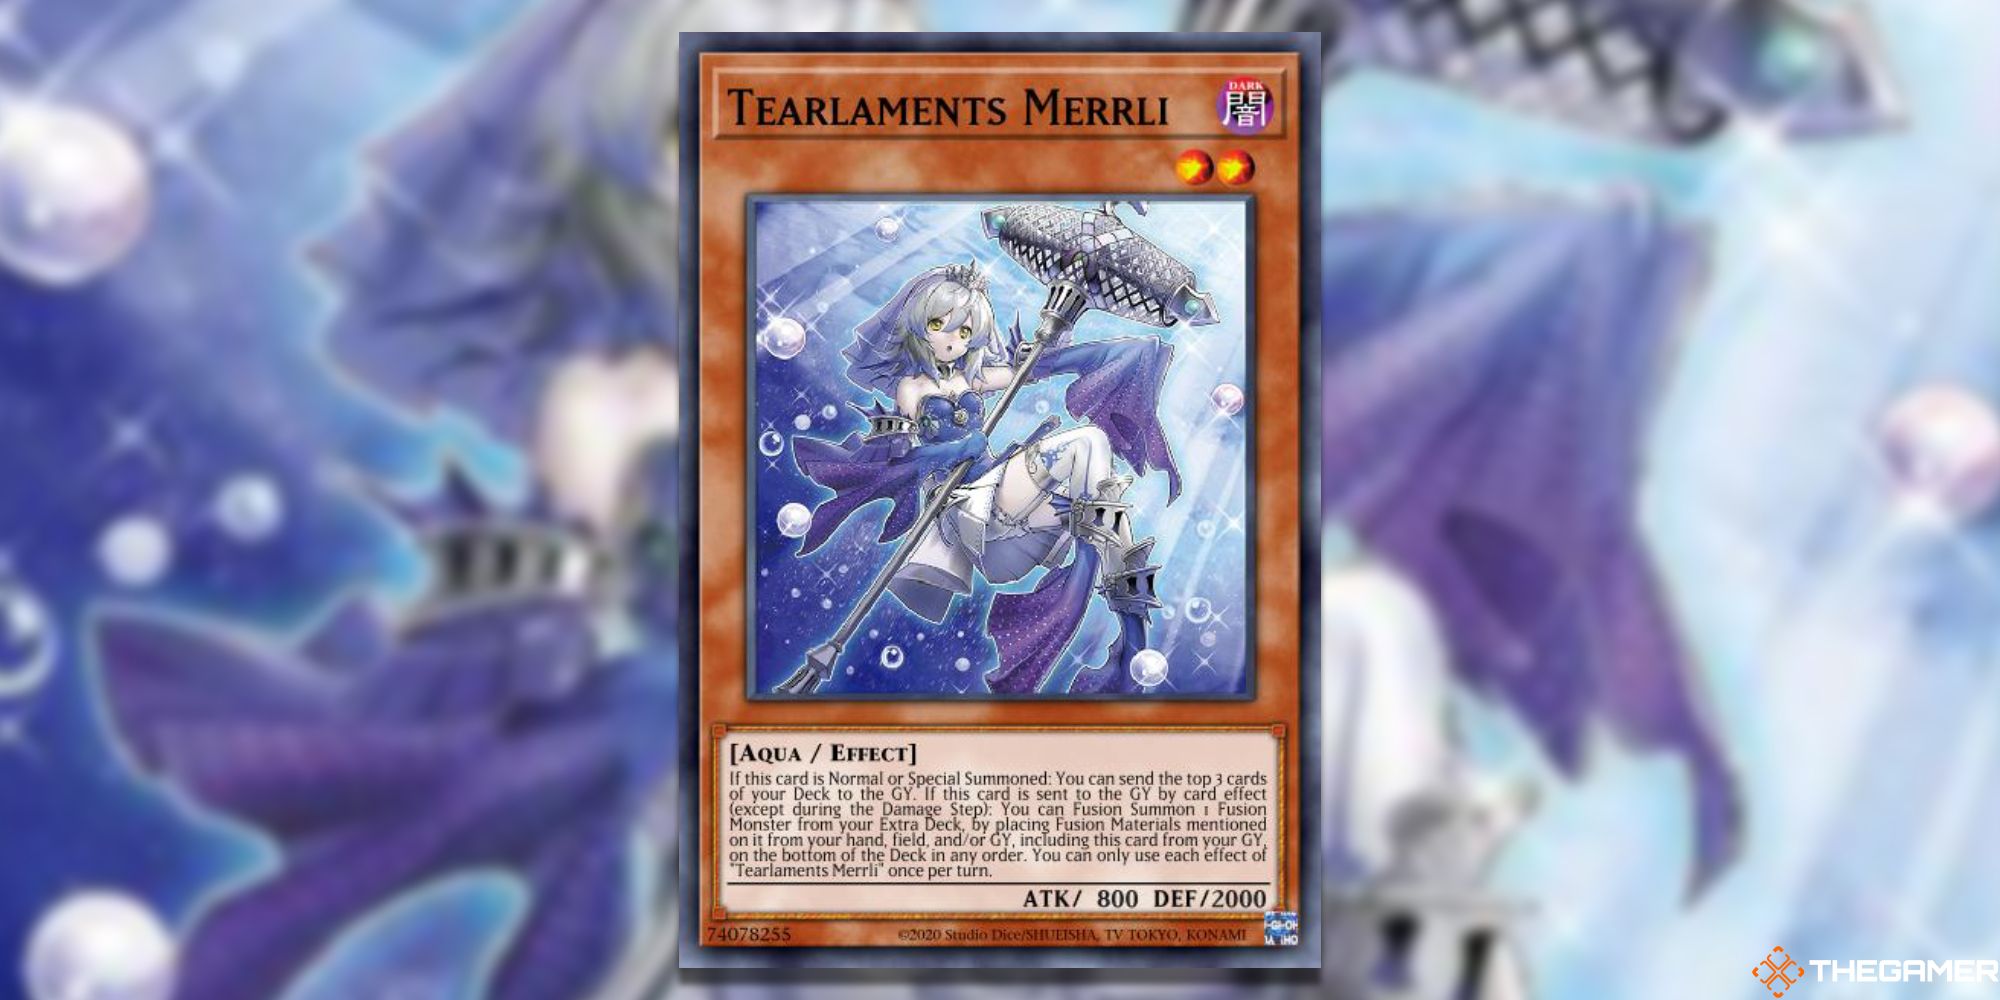 Full card art of Tiaraments Meruri using Yu-Gi-Oh's Gauss Blur!master duel